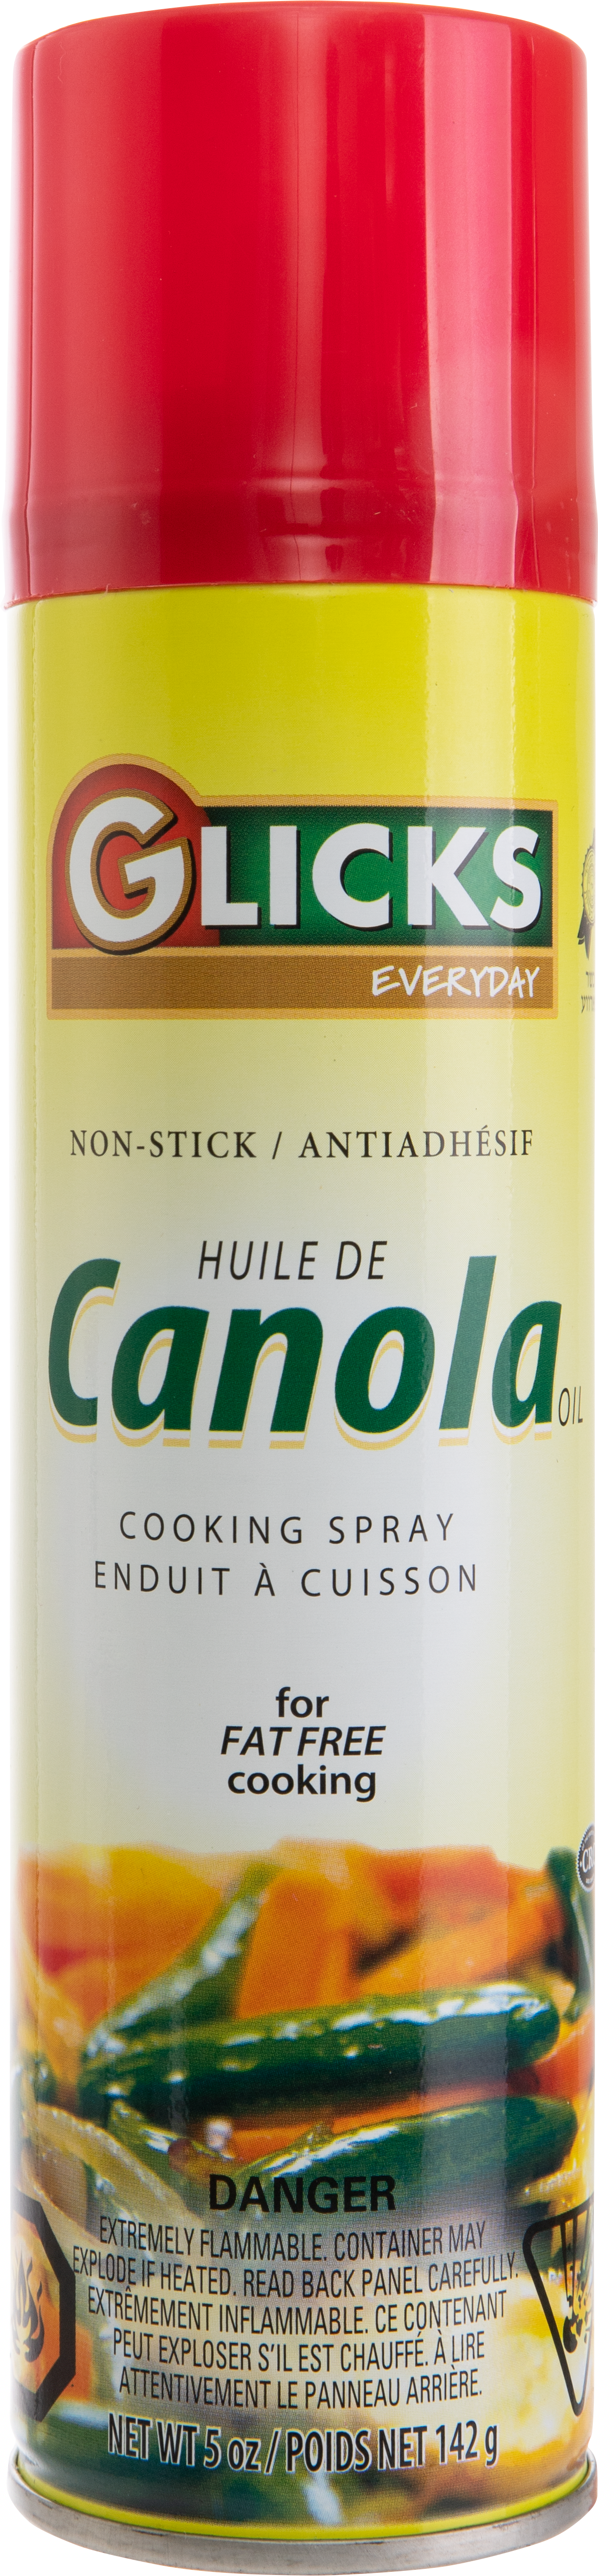 Glicks Canola Oil Cooking Spray - Kayco